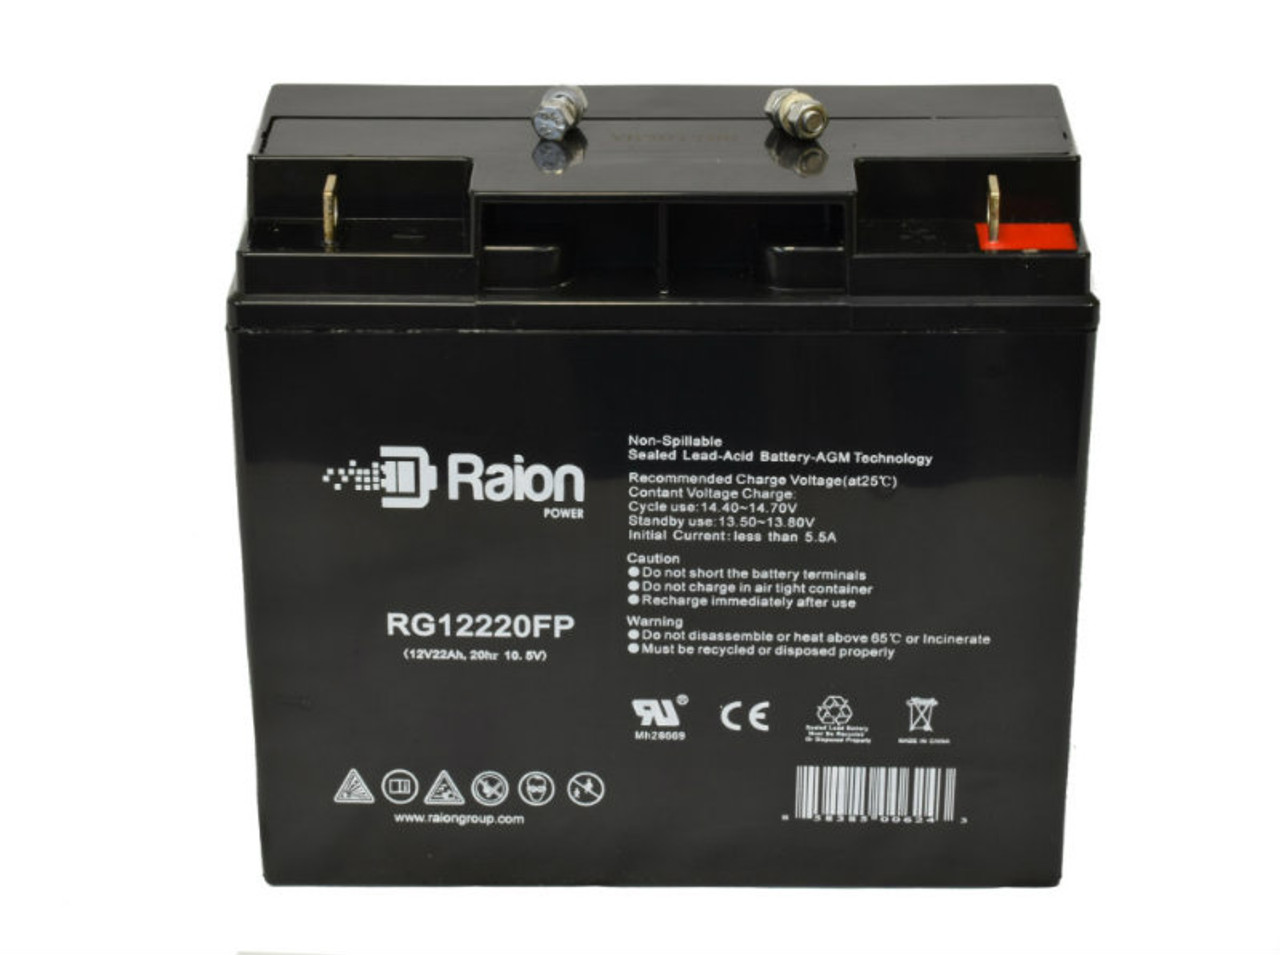 Raion Power RG12220FP 12V 22Ah Lead Acid Battery for Chilwee 6-FM-24